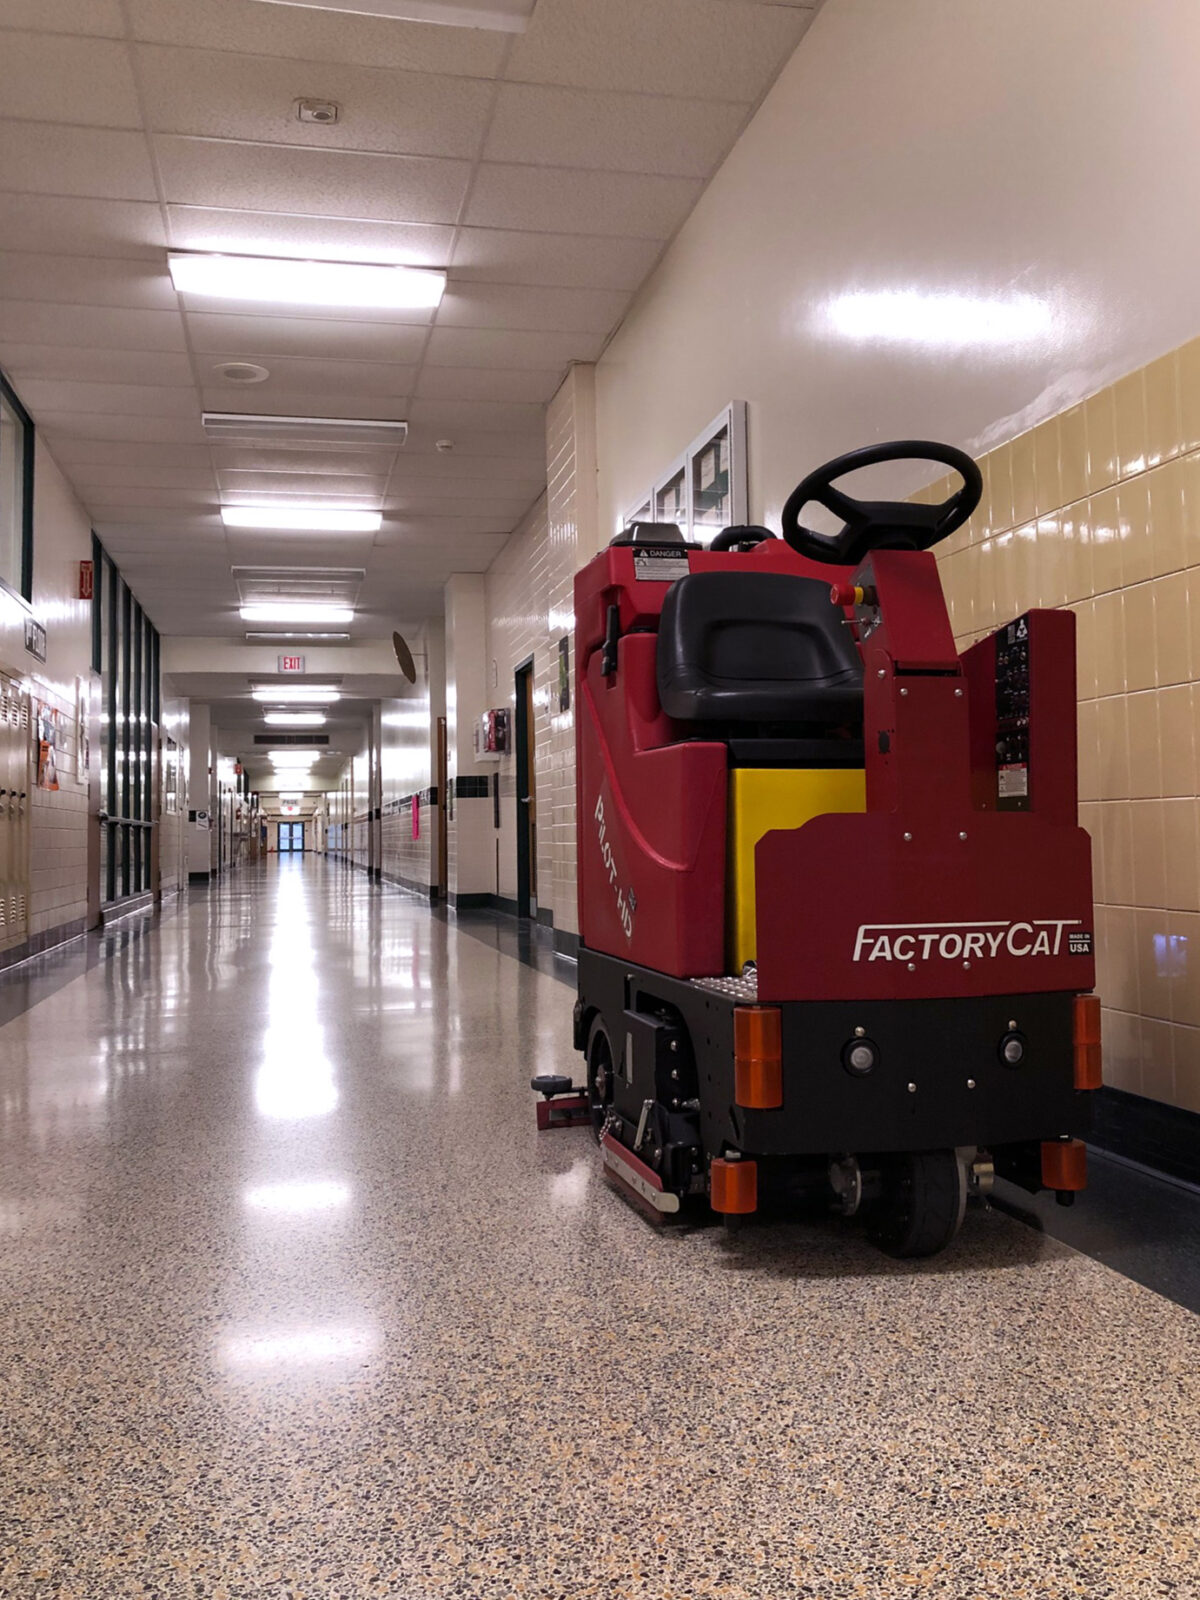 Factory Cat Pilot HD Floor Scrubber cleaning a school hallway